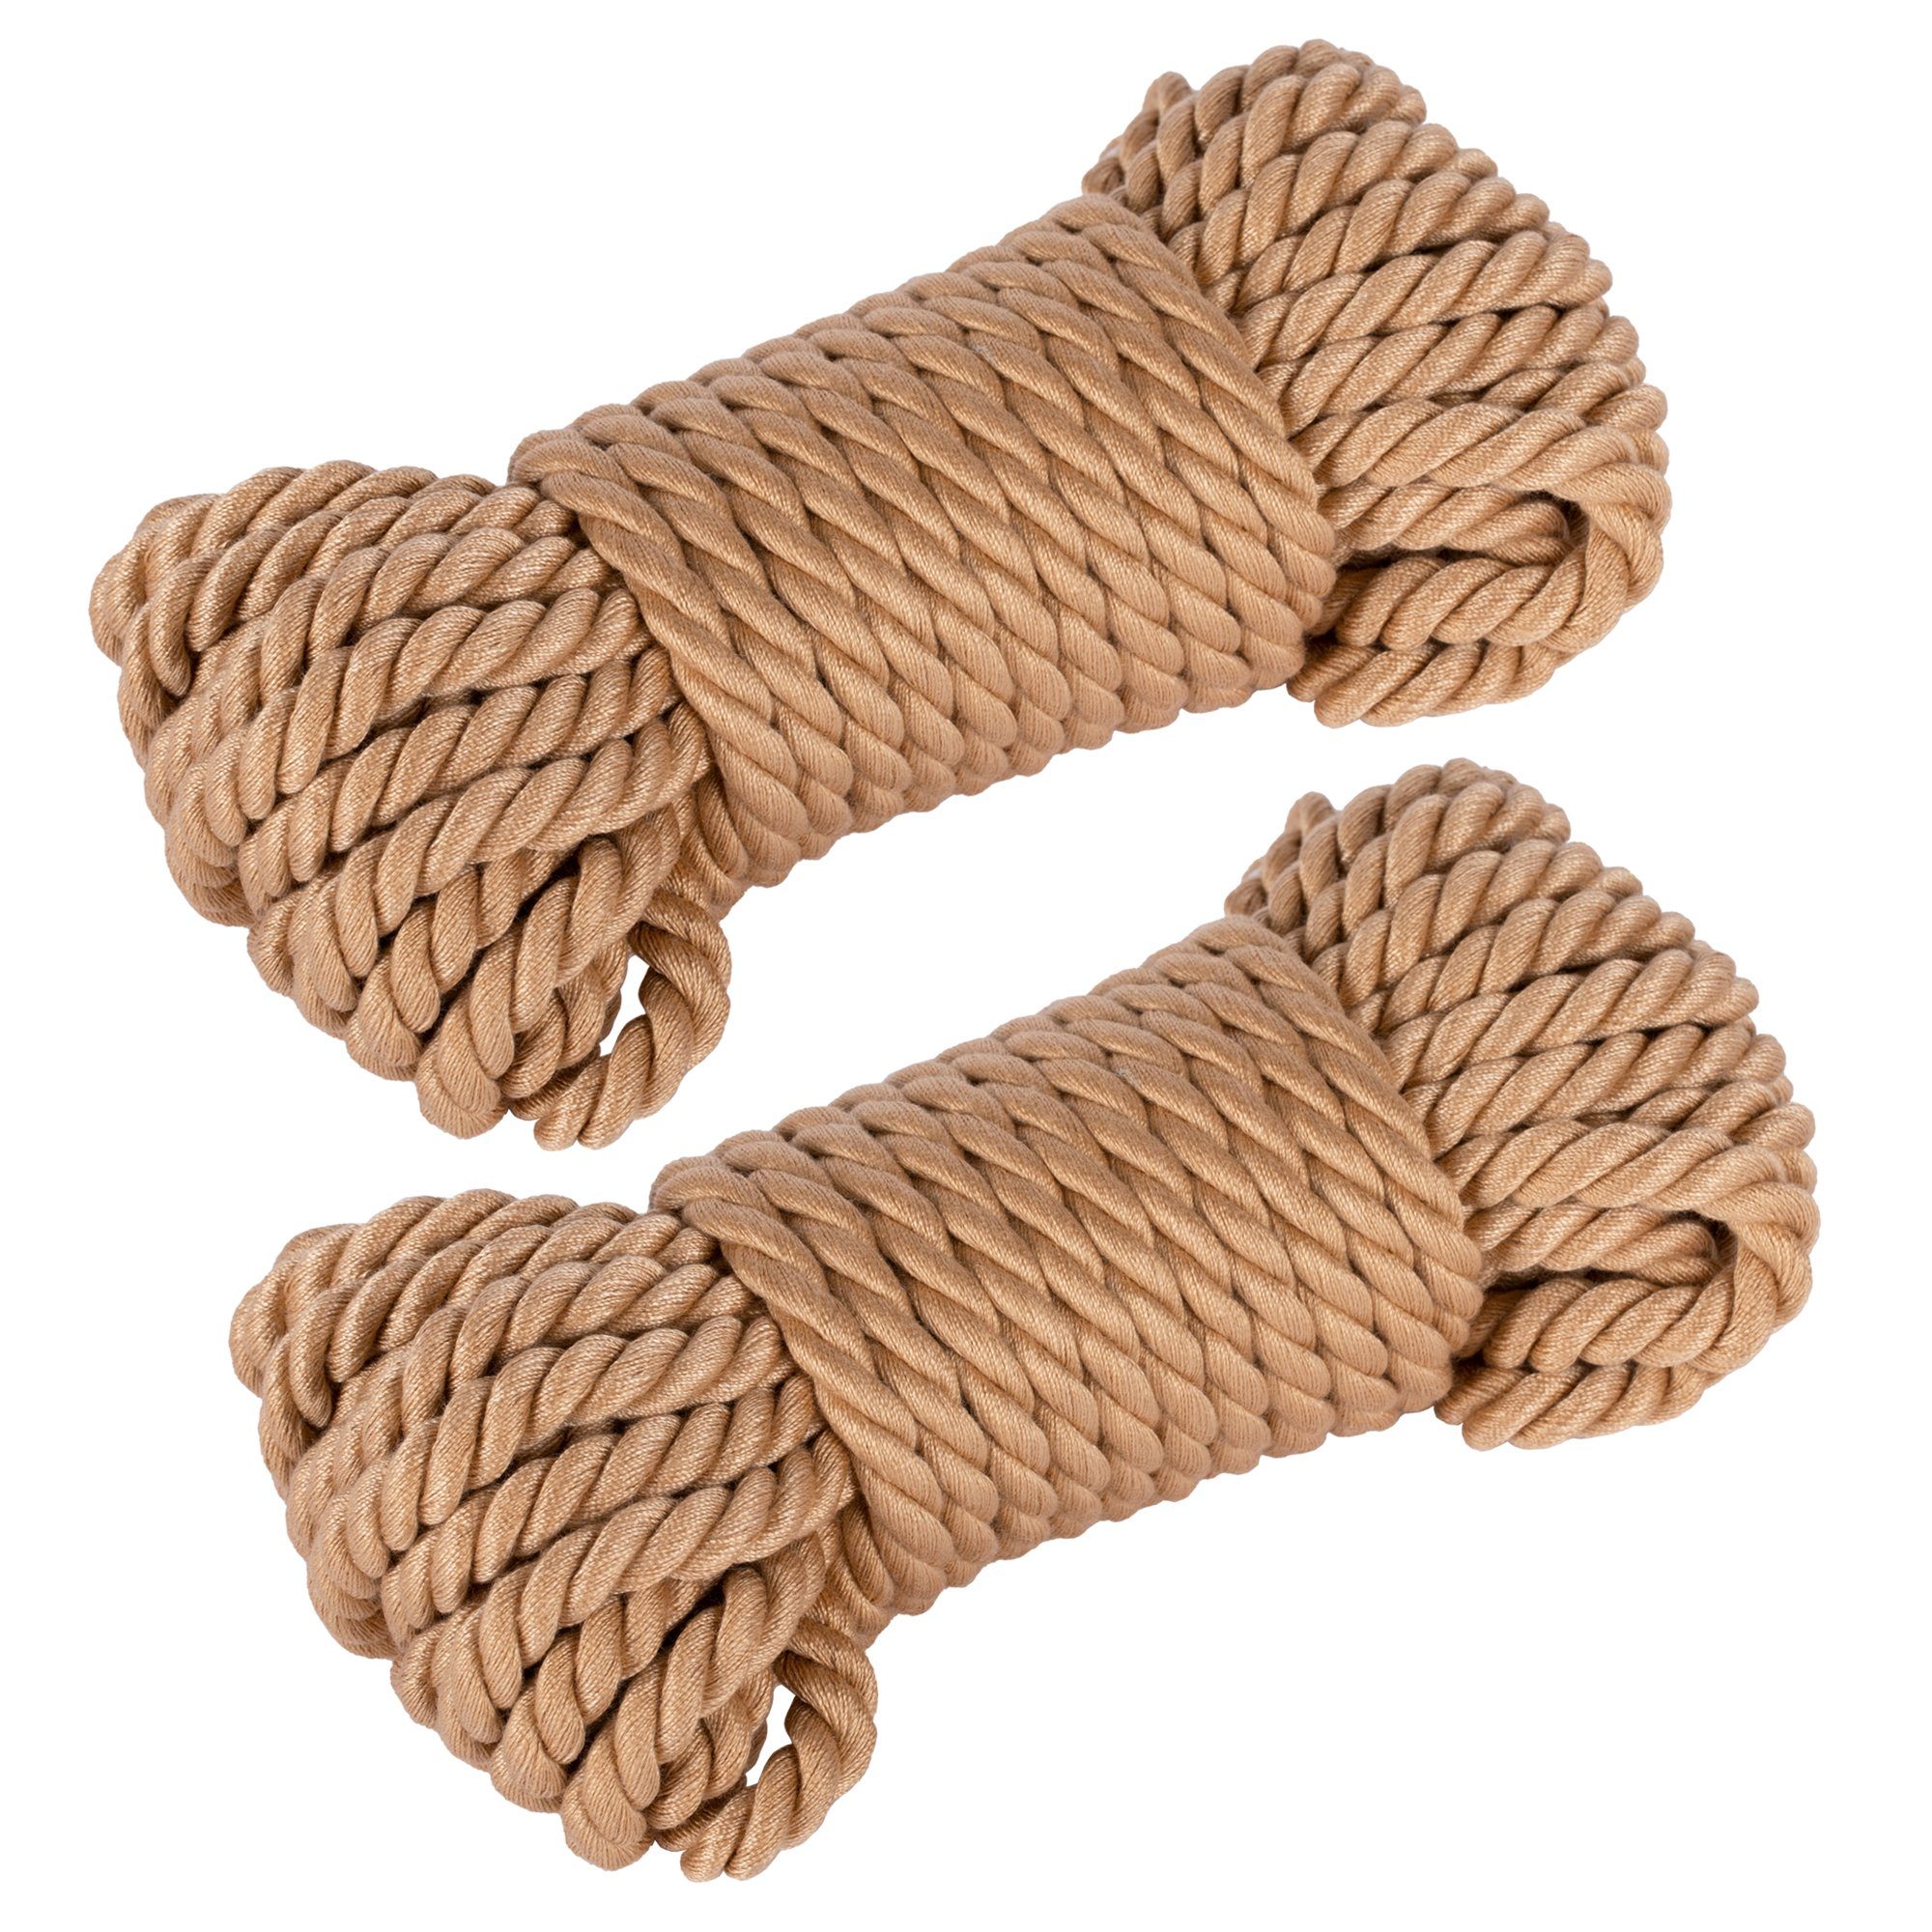 10 x weiches 2 Shibari Sandritas Bondage m BDSM Bondage-Seil Fesselspiele Baumwolle Seil